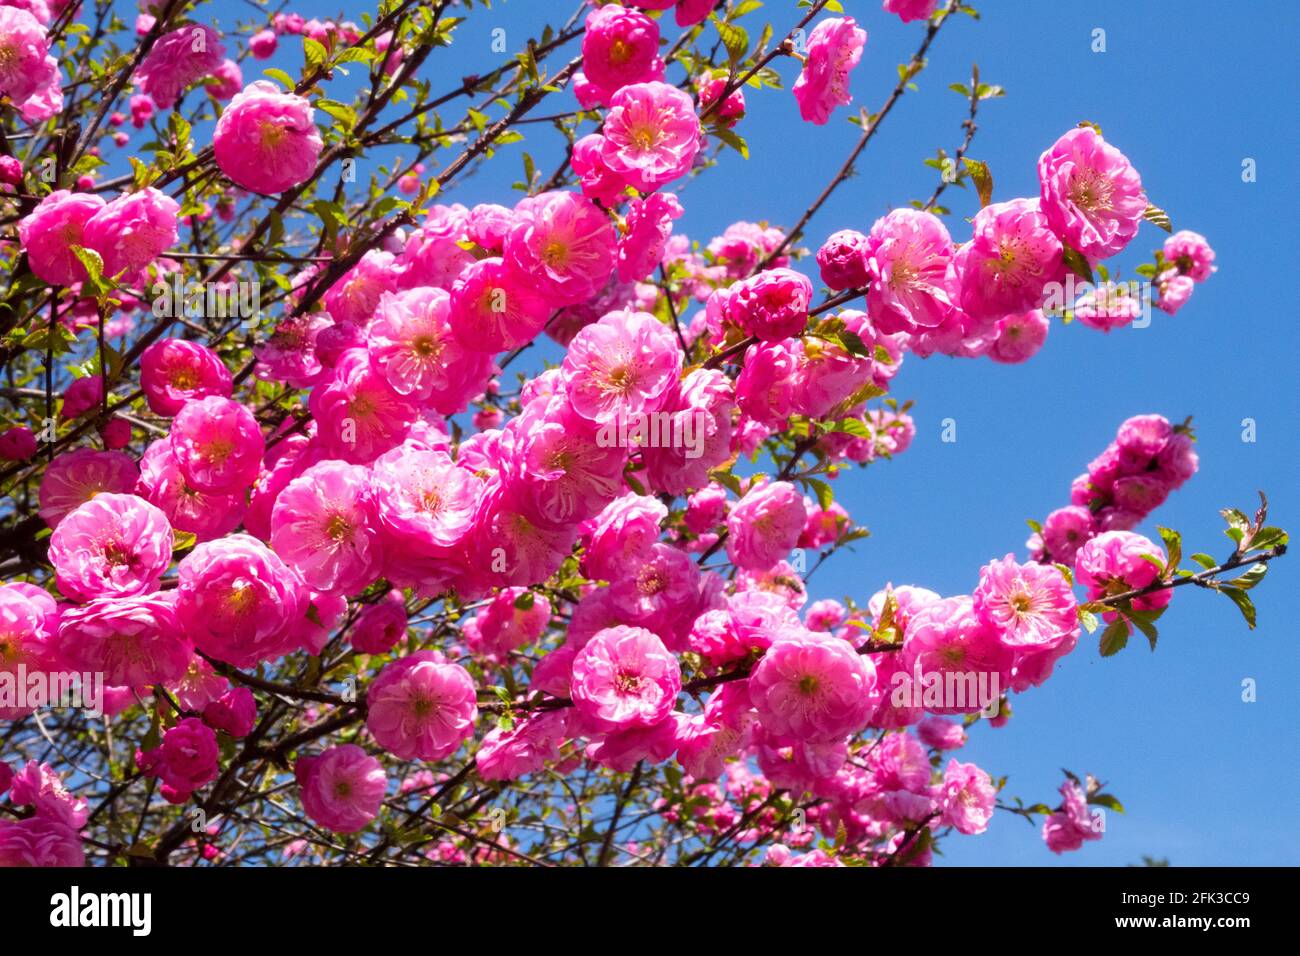 Pink Spring Blossoms Flowering Shrubs April Flowers Branches Blooming Afghan Dwarf Cherry Prunus triloba Rosenmund Blooms Pink Flowering Almond Prunus Stock Photo